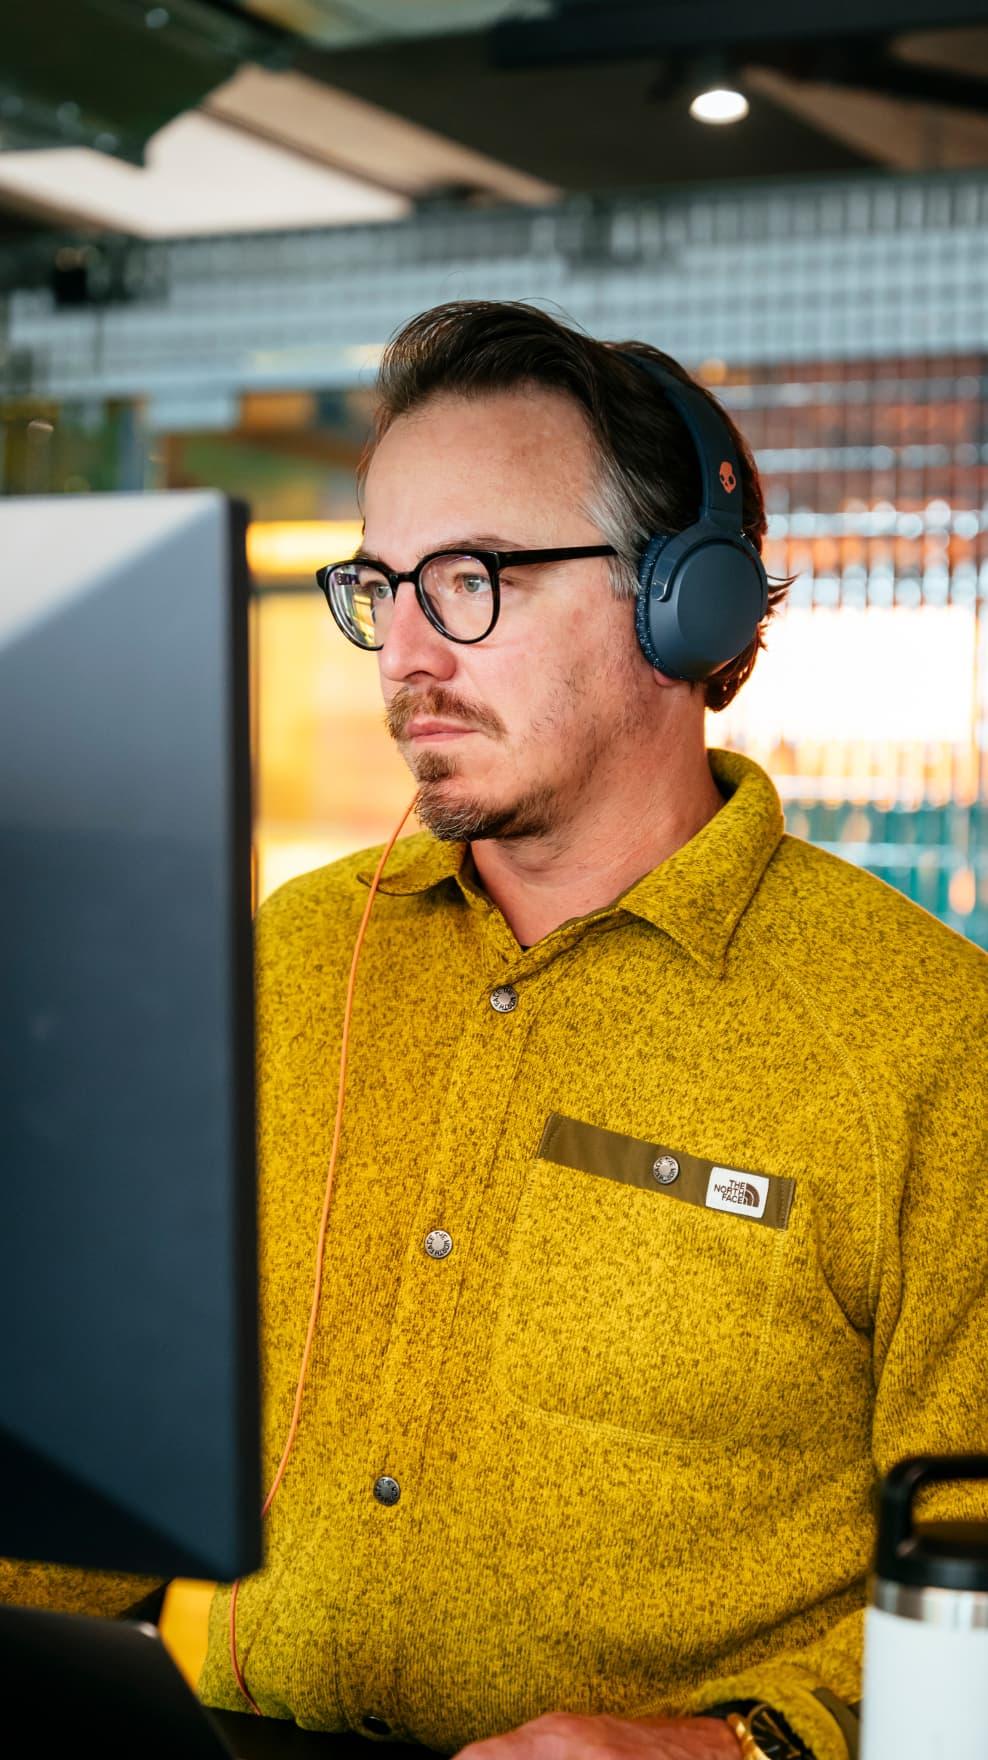 Man works in the office in headphones